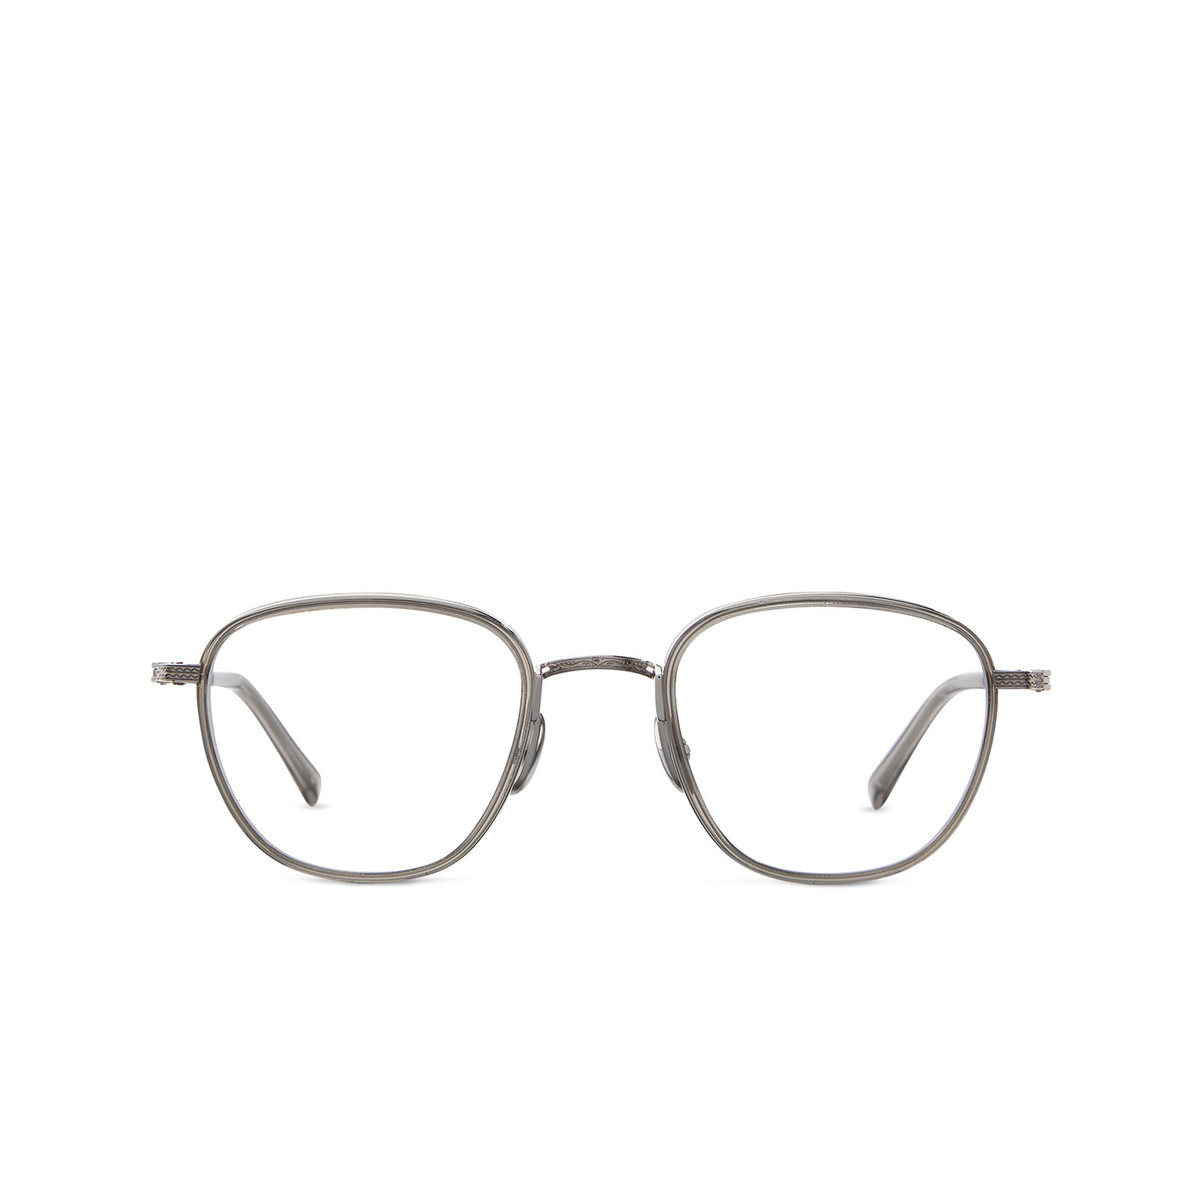 Mr. Leight GRIFFITH II C Eyeglasses GRYCRY-PLT Grey Crystal-Platinum - 1/3